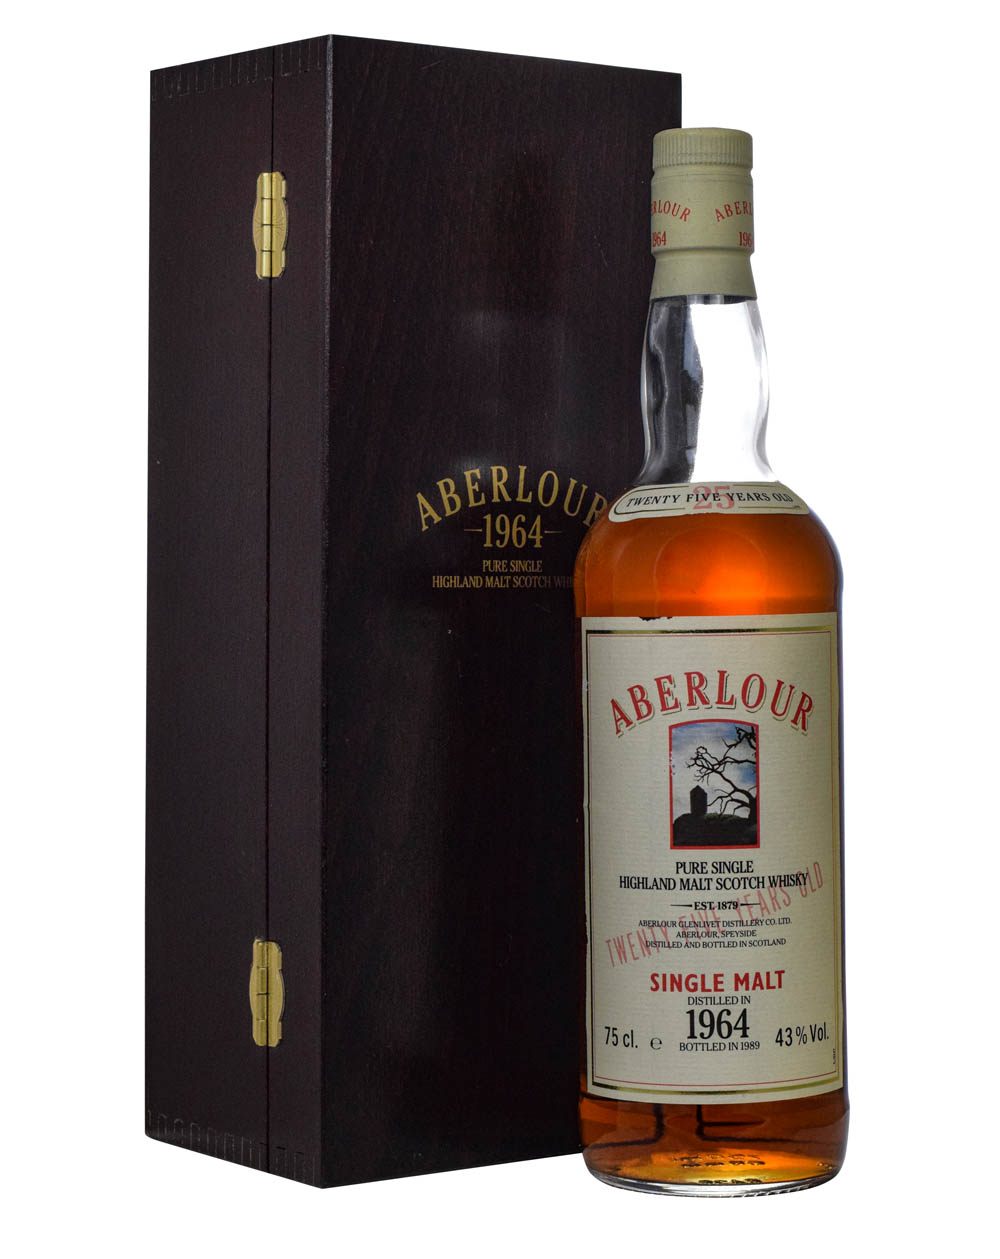 Whisky Aberlour - Glenlivet 18 years Distilled 1989 limited edition